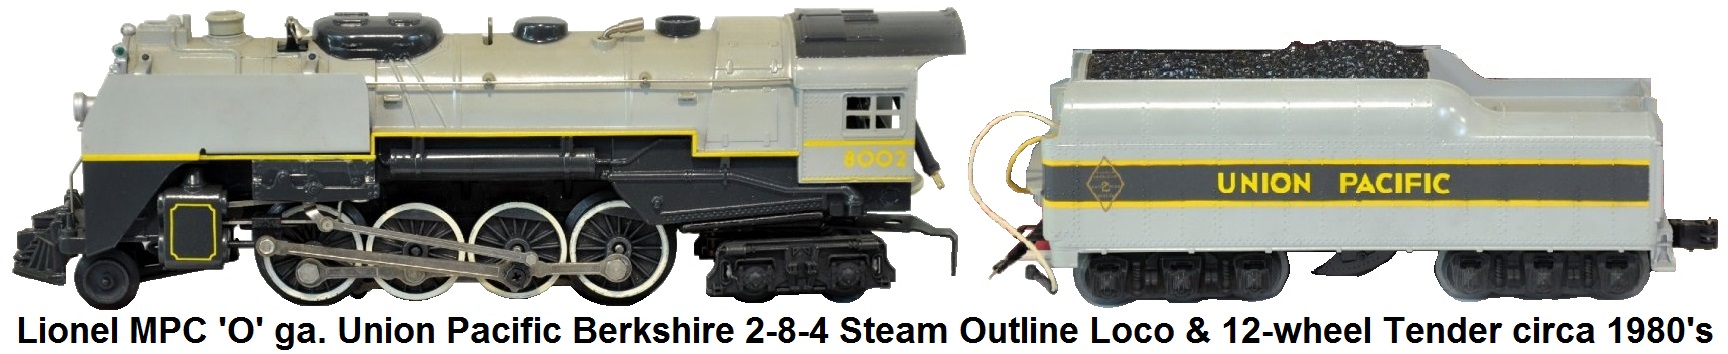 Lionel MPC 'O' gauge #6-8002 Berkshire 2-8-4 steam outline locomotive and 12-wheel tender circa 1980